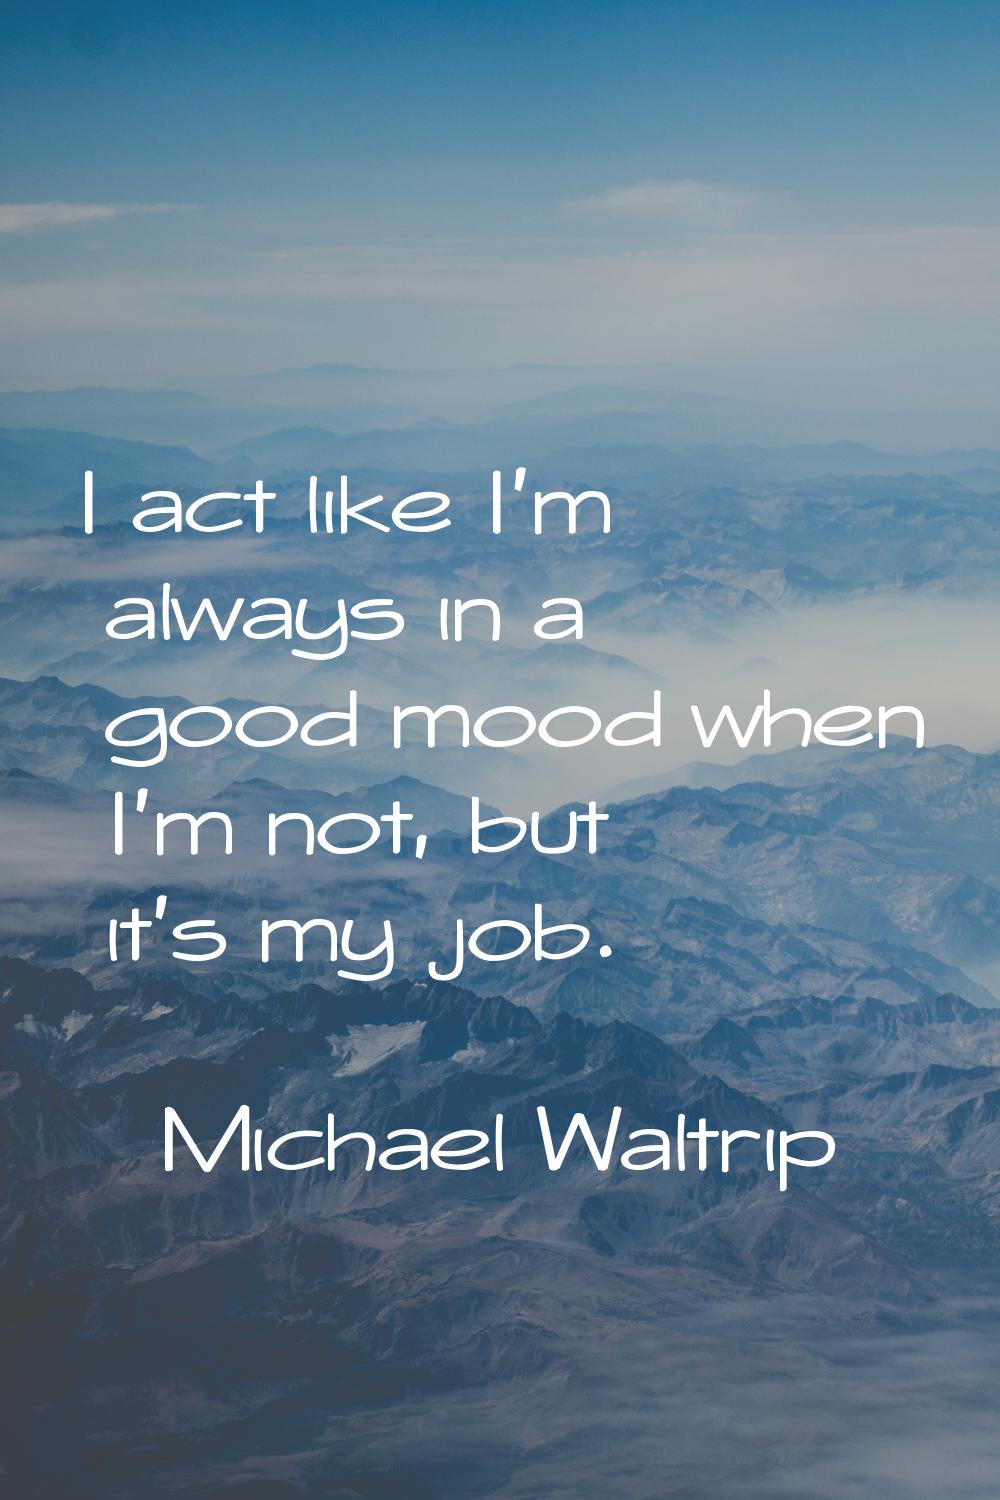 I act like I'm always in a good mood when I'm not, but it's my job.